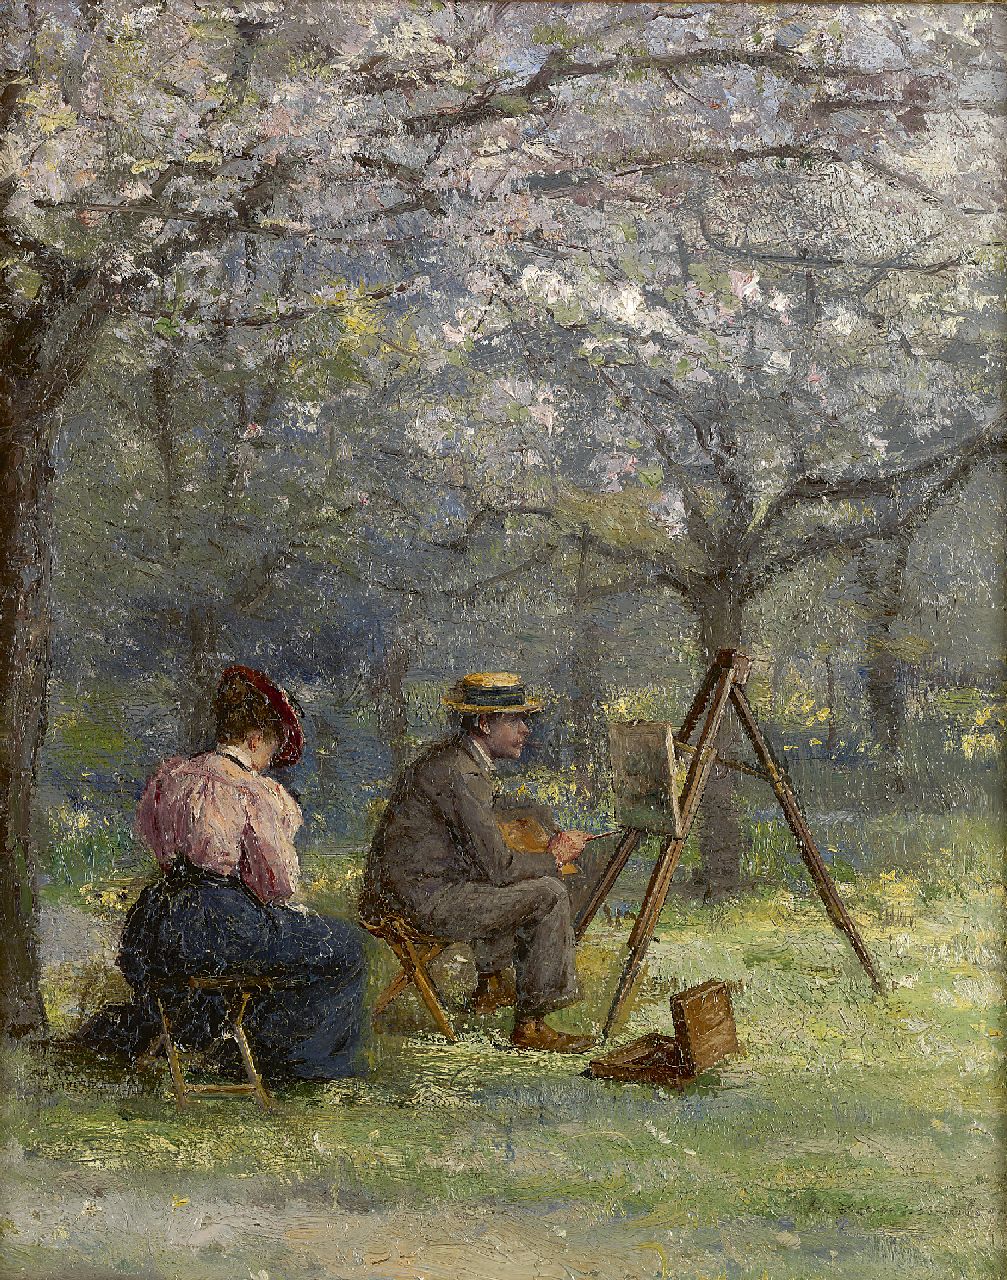 Engelen A.F.L. van | Antoine François 'Louis' van Engelen, The plein air painter, Öl auf Holz 24,5 x 19,7 cm, signed l.r.